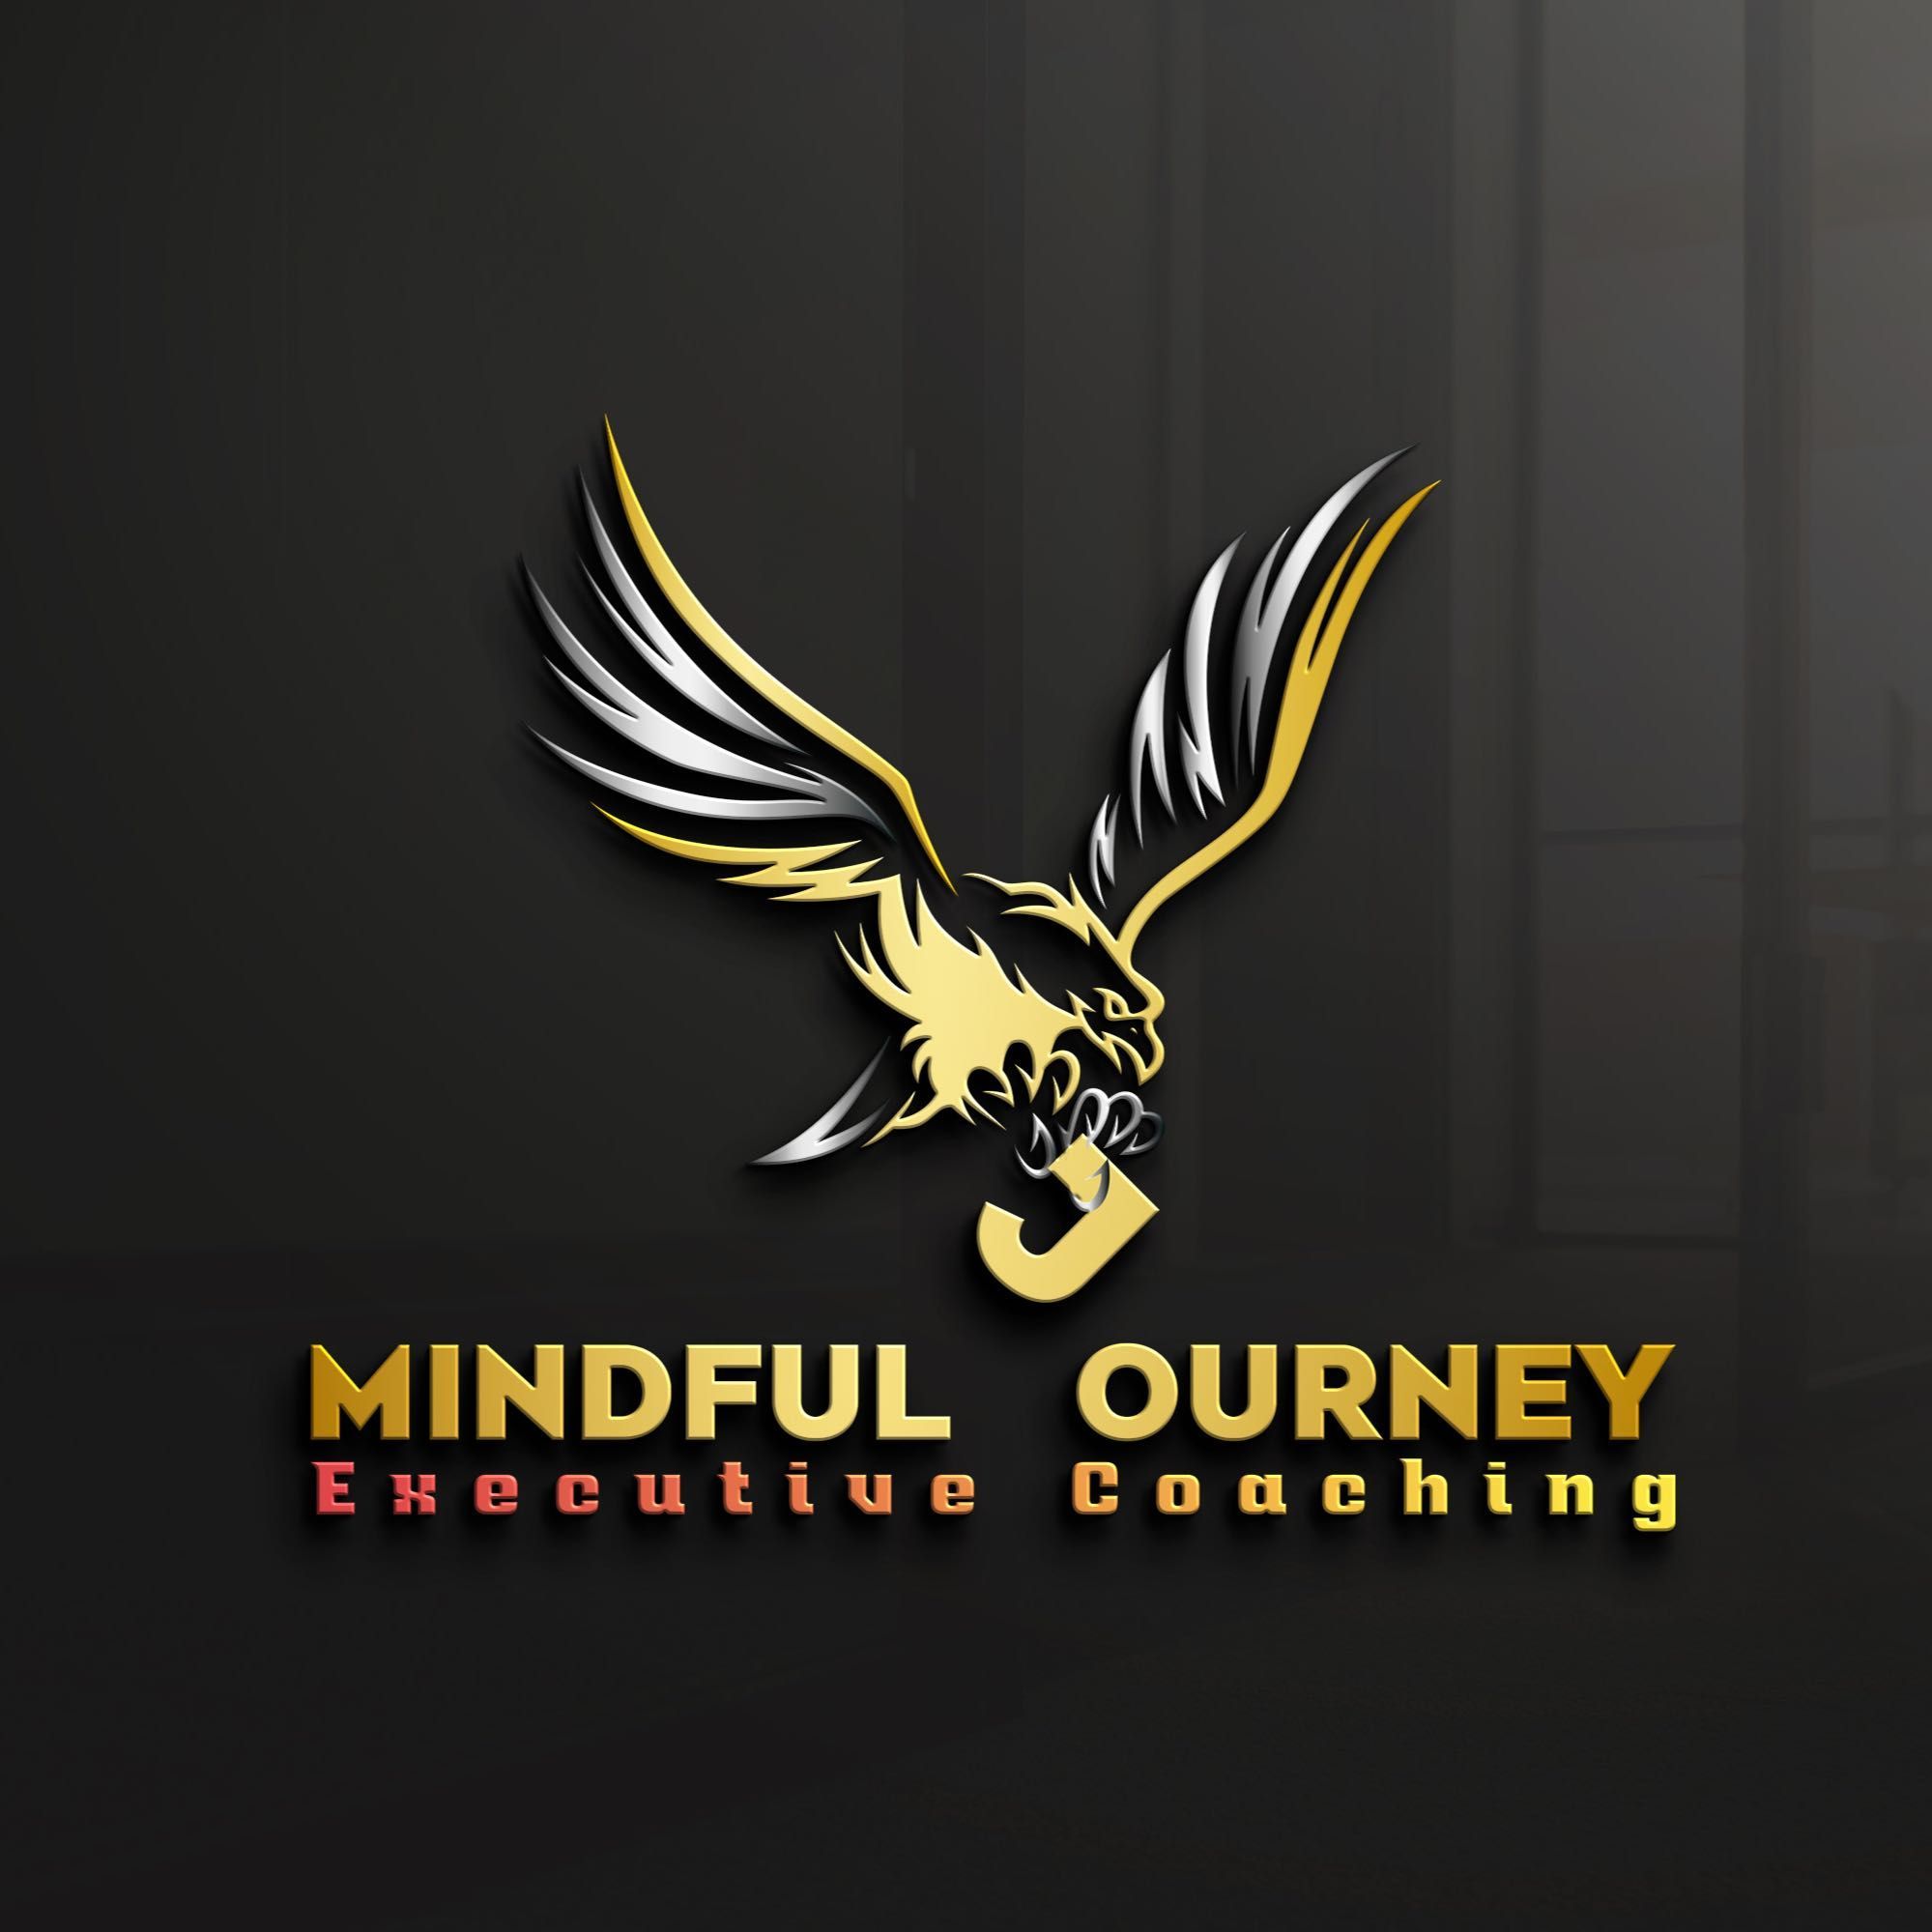 Mindful Journey Executive Coaching, 112 S Providence Rd, Richmond, 23236